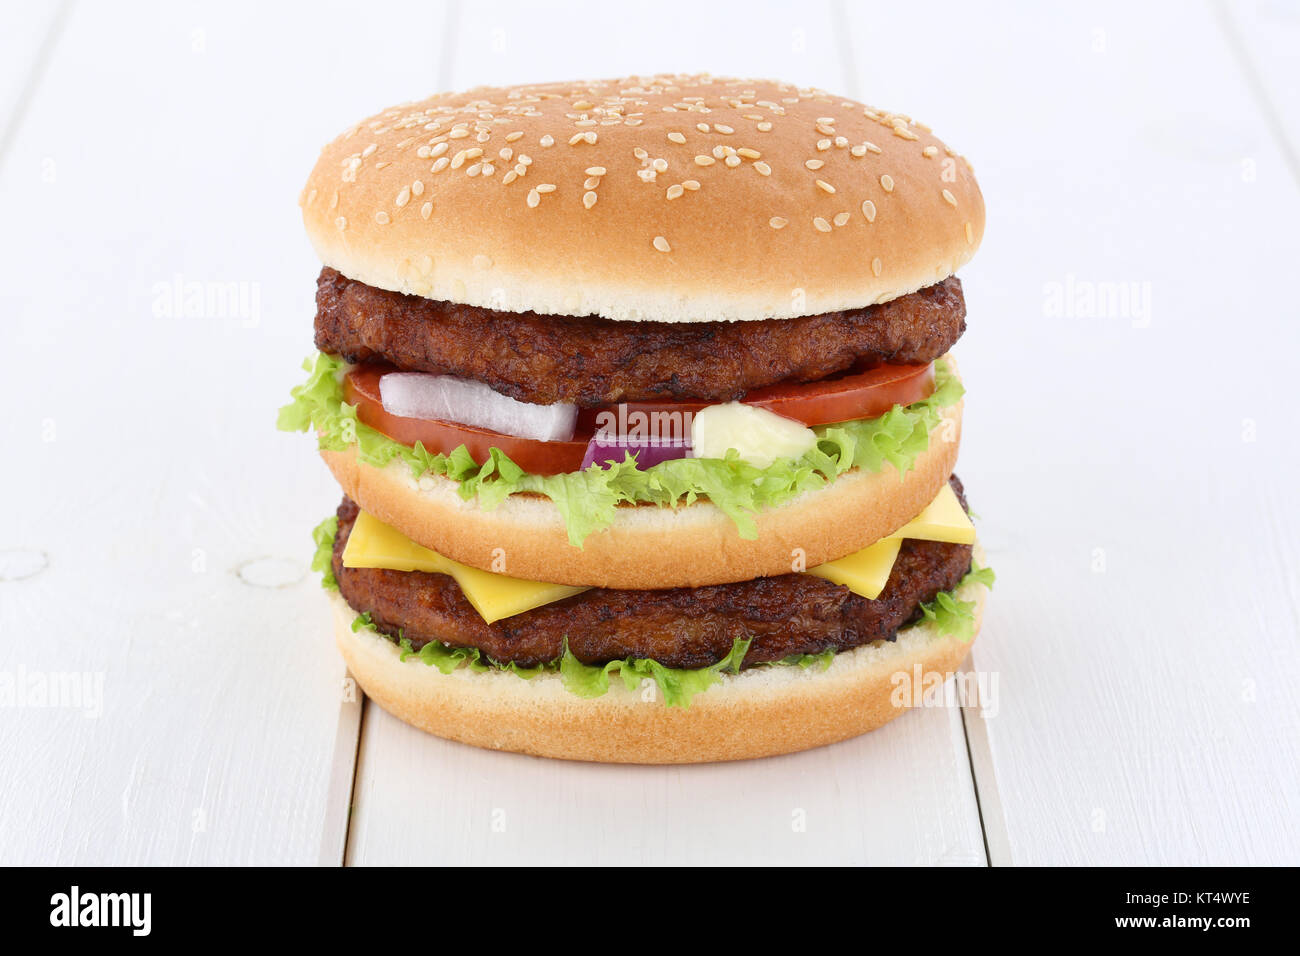 doubleburger double burger hamburger cheese tomato salad wooden board Stock Photo